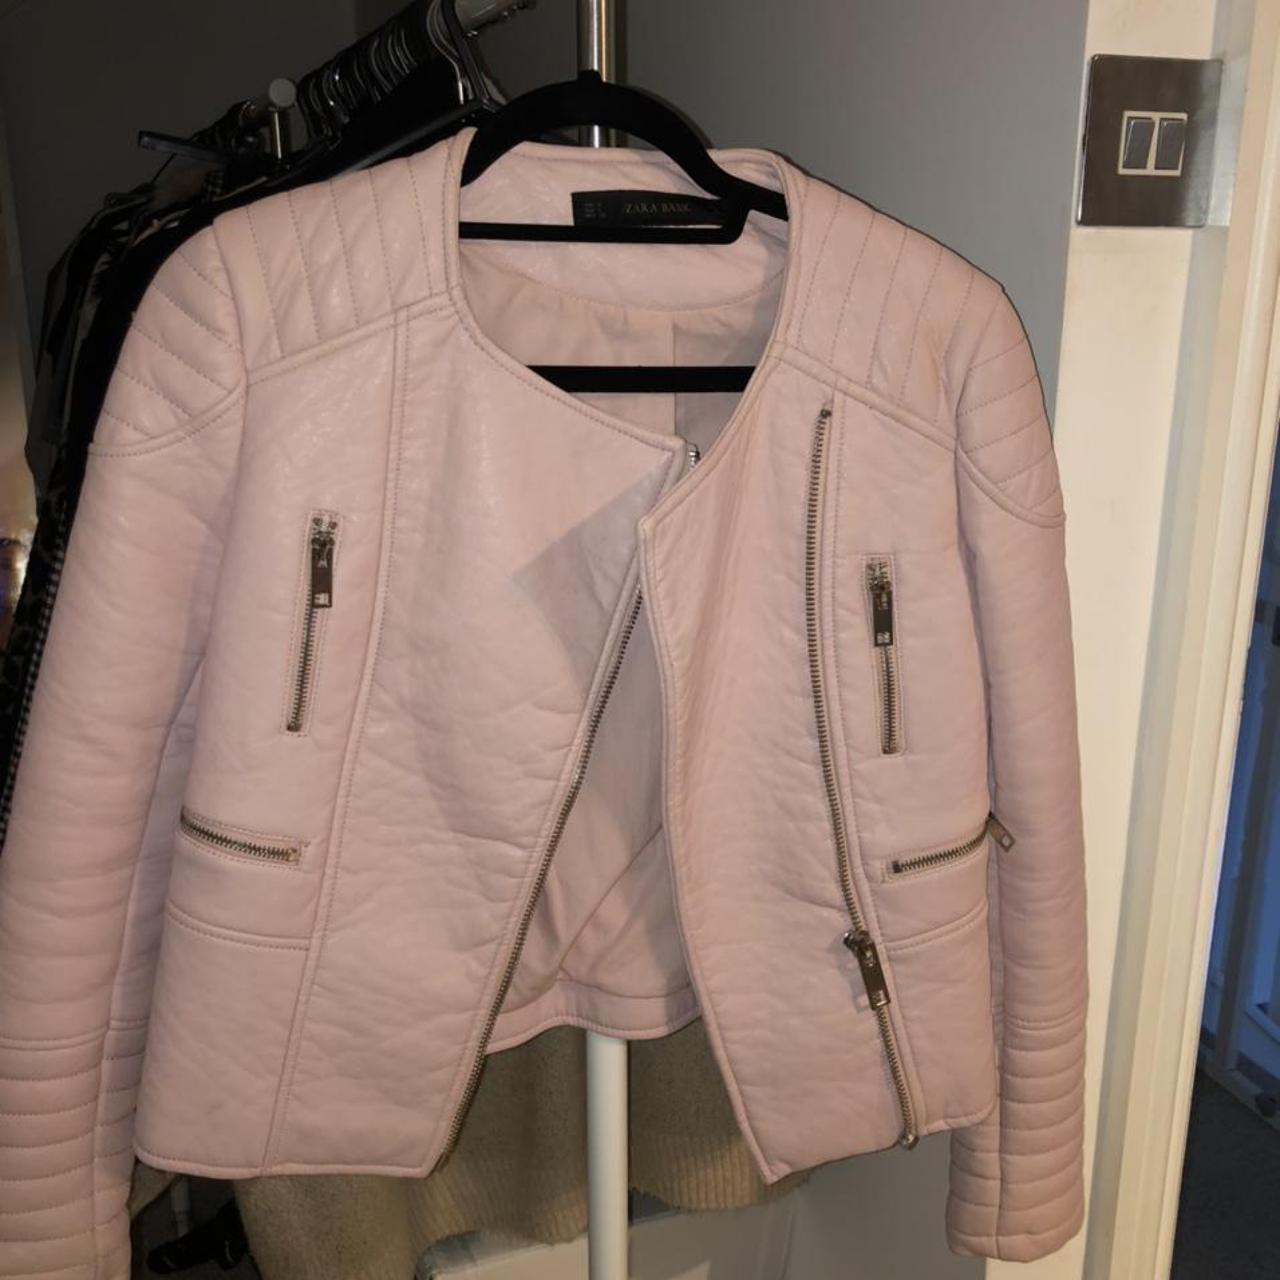 Zara Pink Jacket Leather jacket Faux leather pink... - Depop